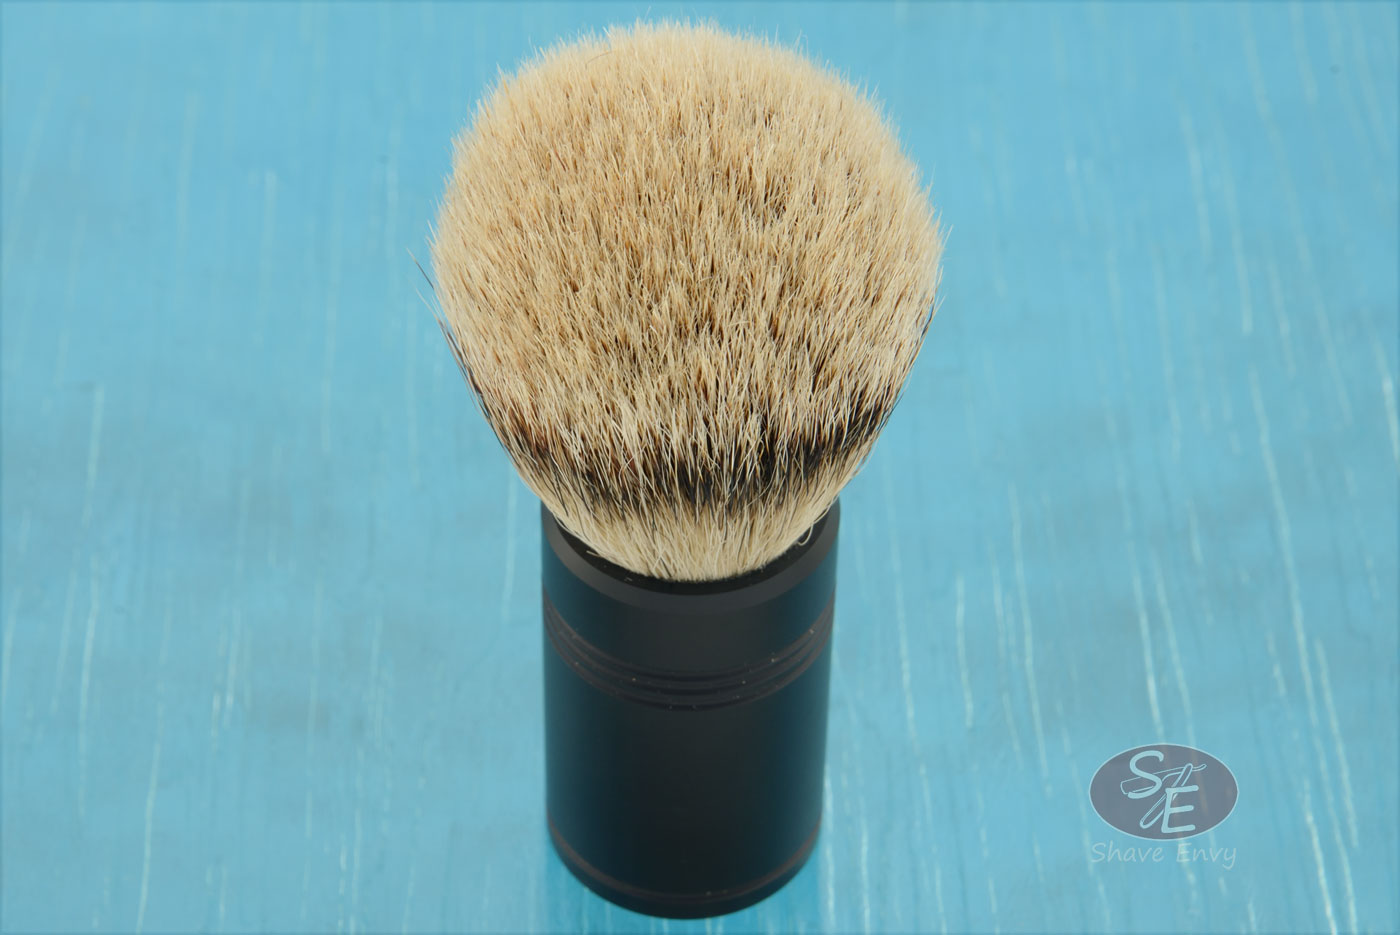 Shaving Brush with Aluminum, Black Anodized, Best Badger (24mm Knot)